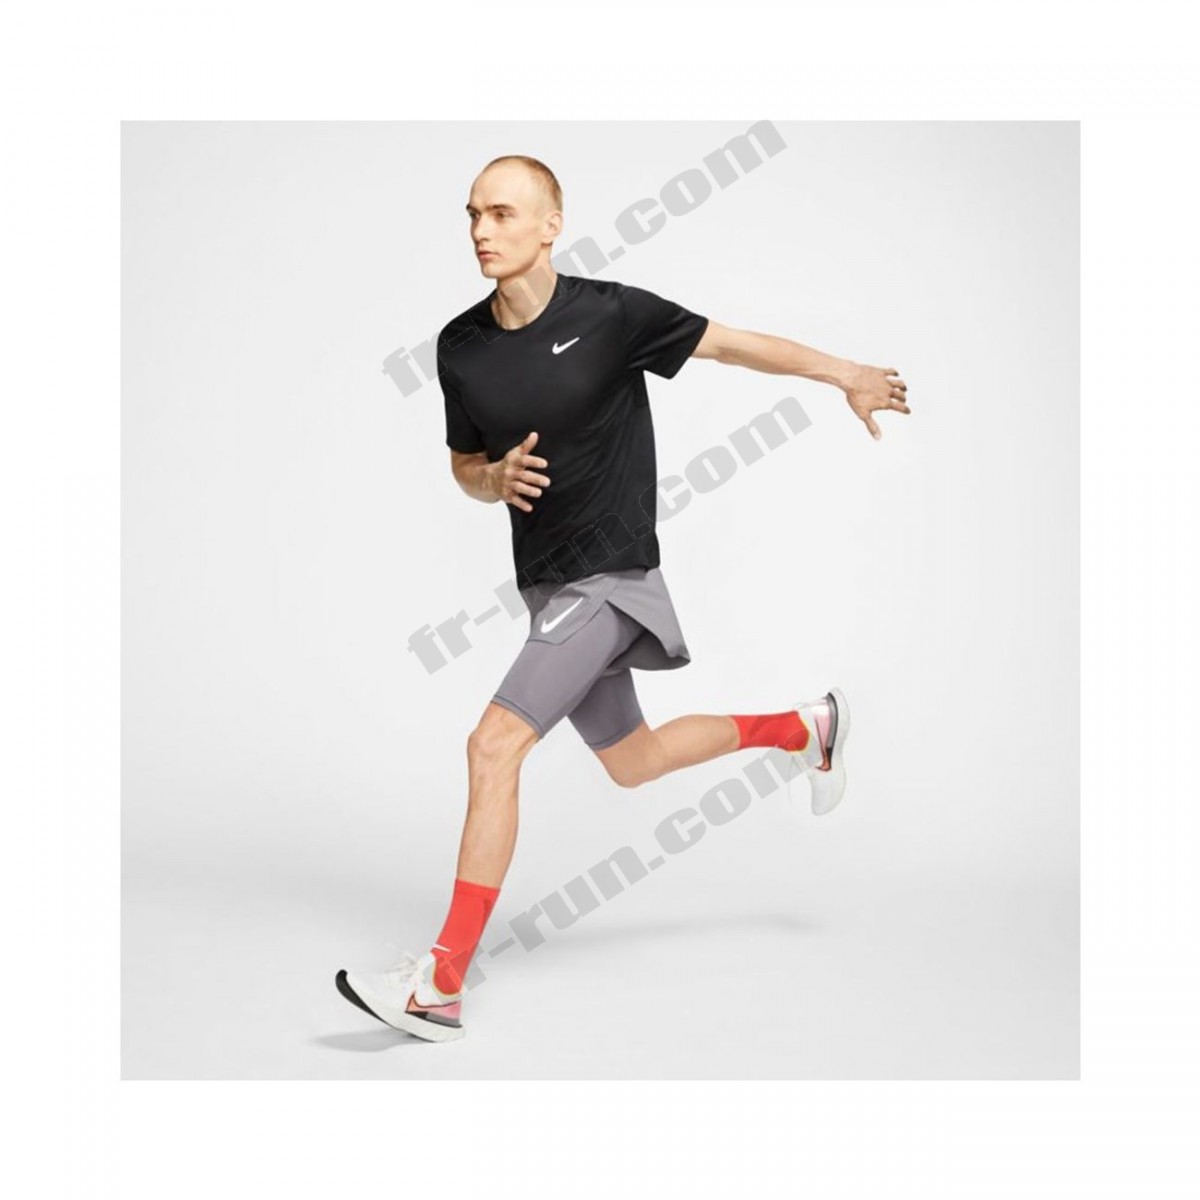 Nike/running homme NIKE Nike Breathe Run √ Nouveau style √ Soldes - -8